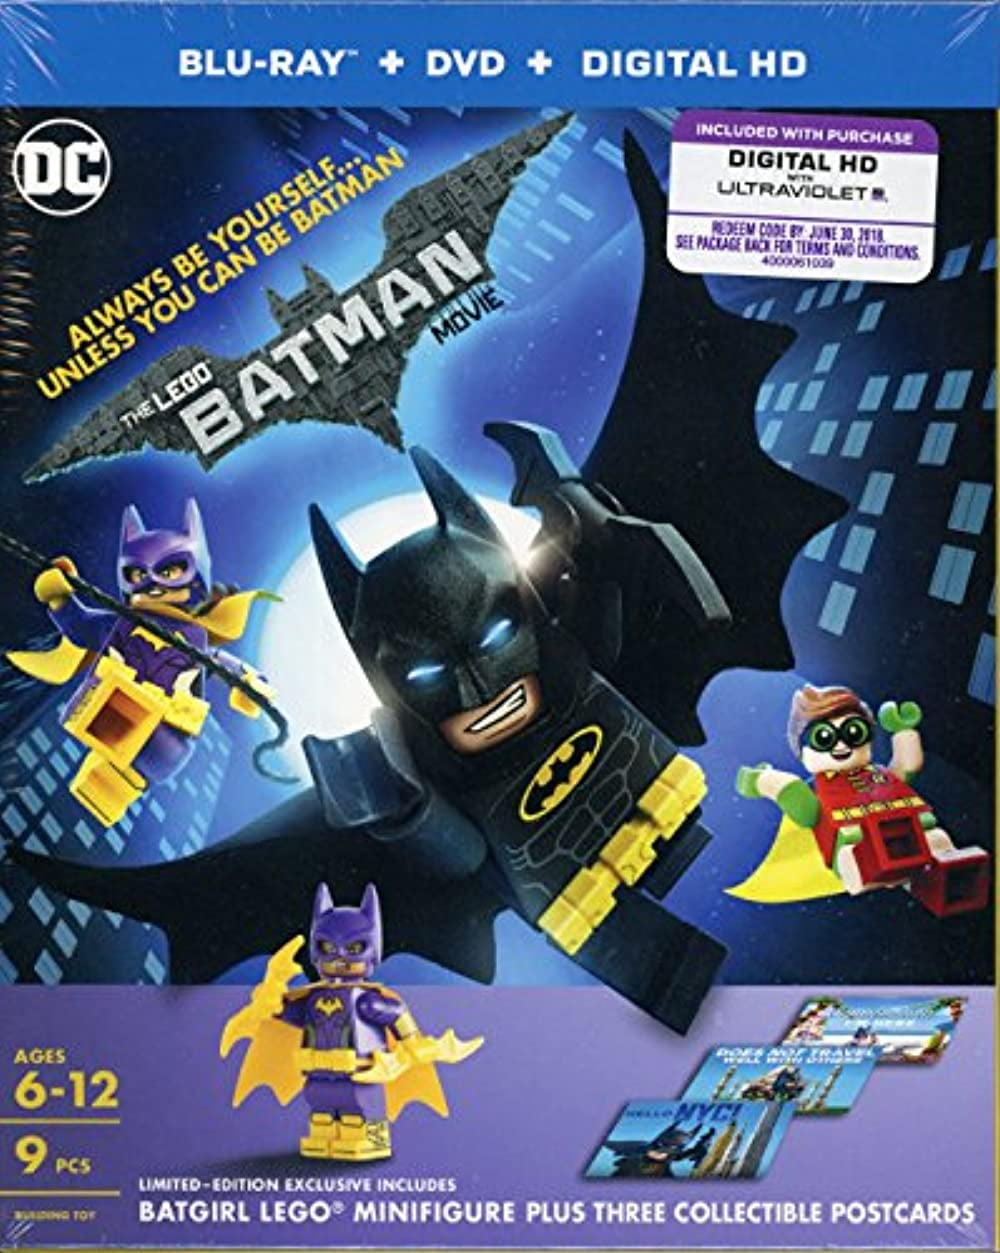 Dyrke motion Troende Langt væk Pre-owned - The Lego Batman Movie Blu ray DVD - Walmart.com